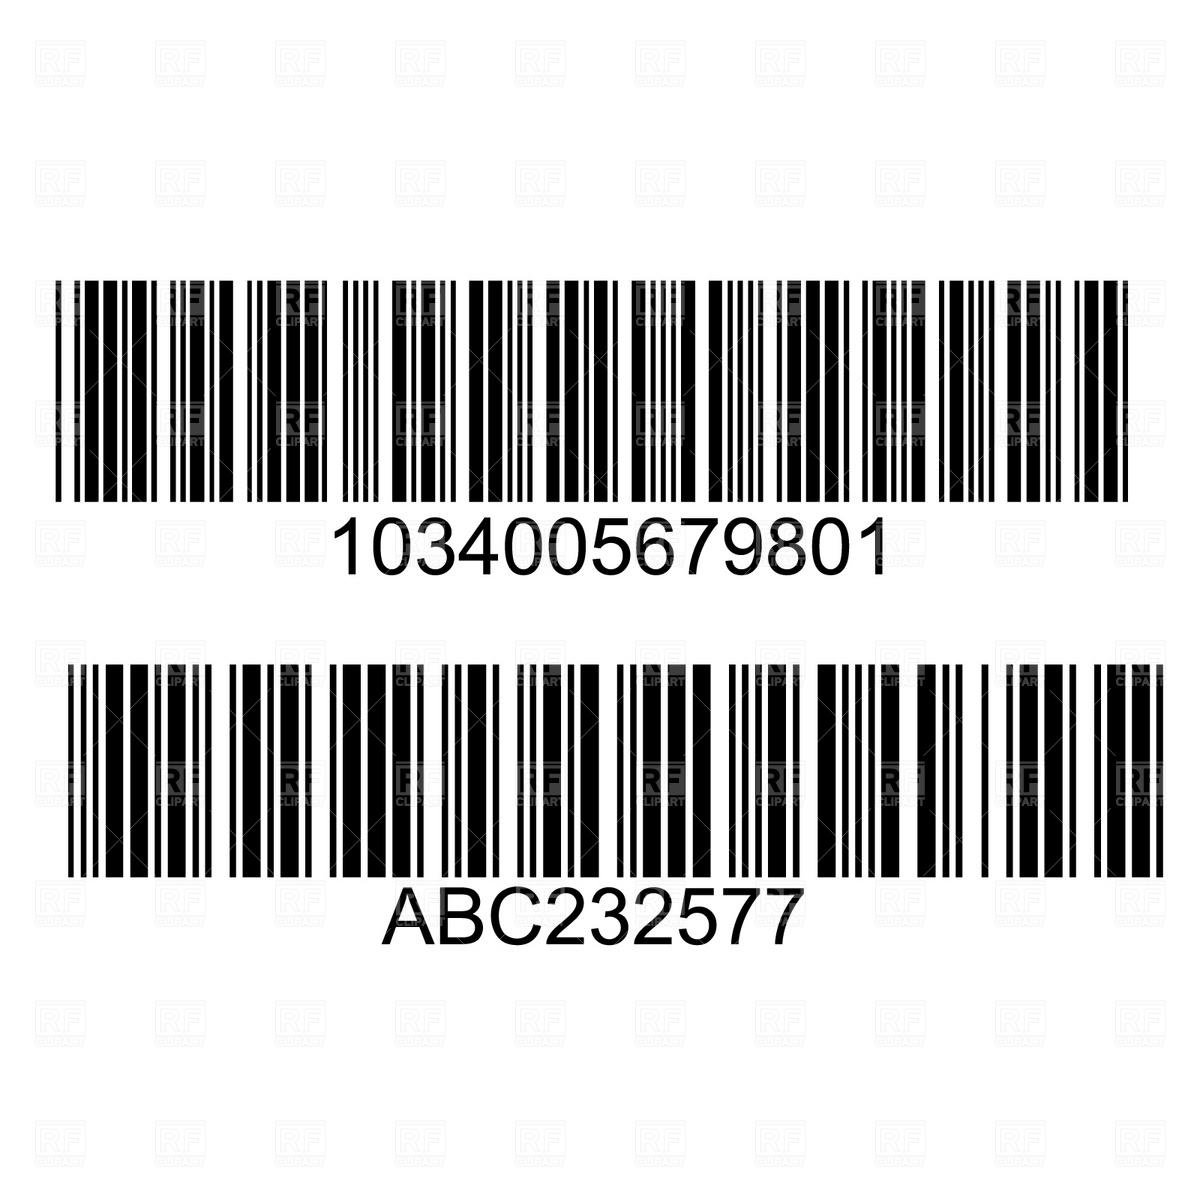 Free Vector Clip Art of a Barcode